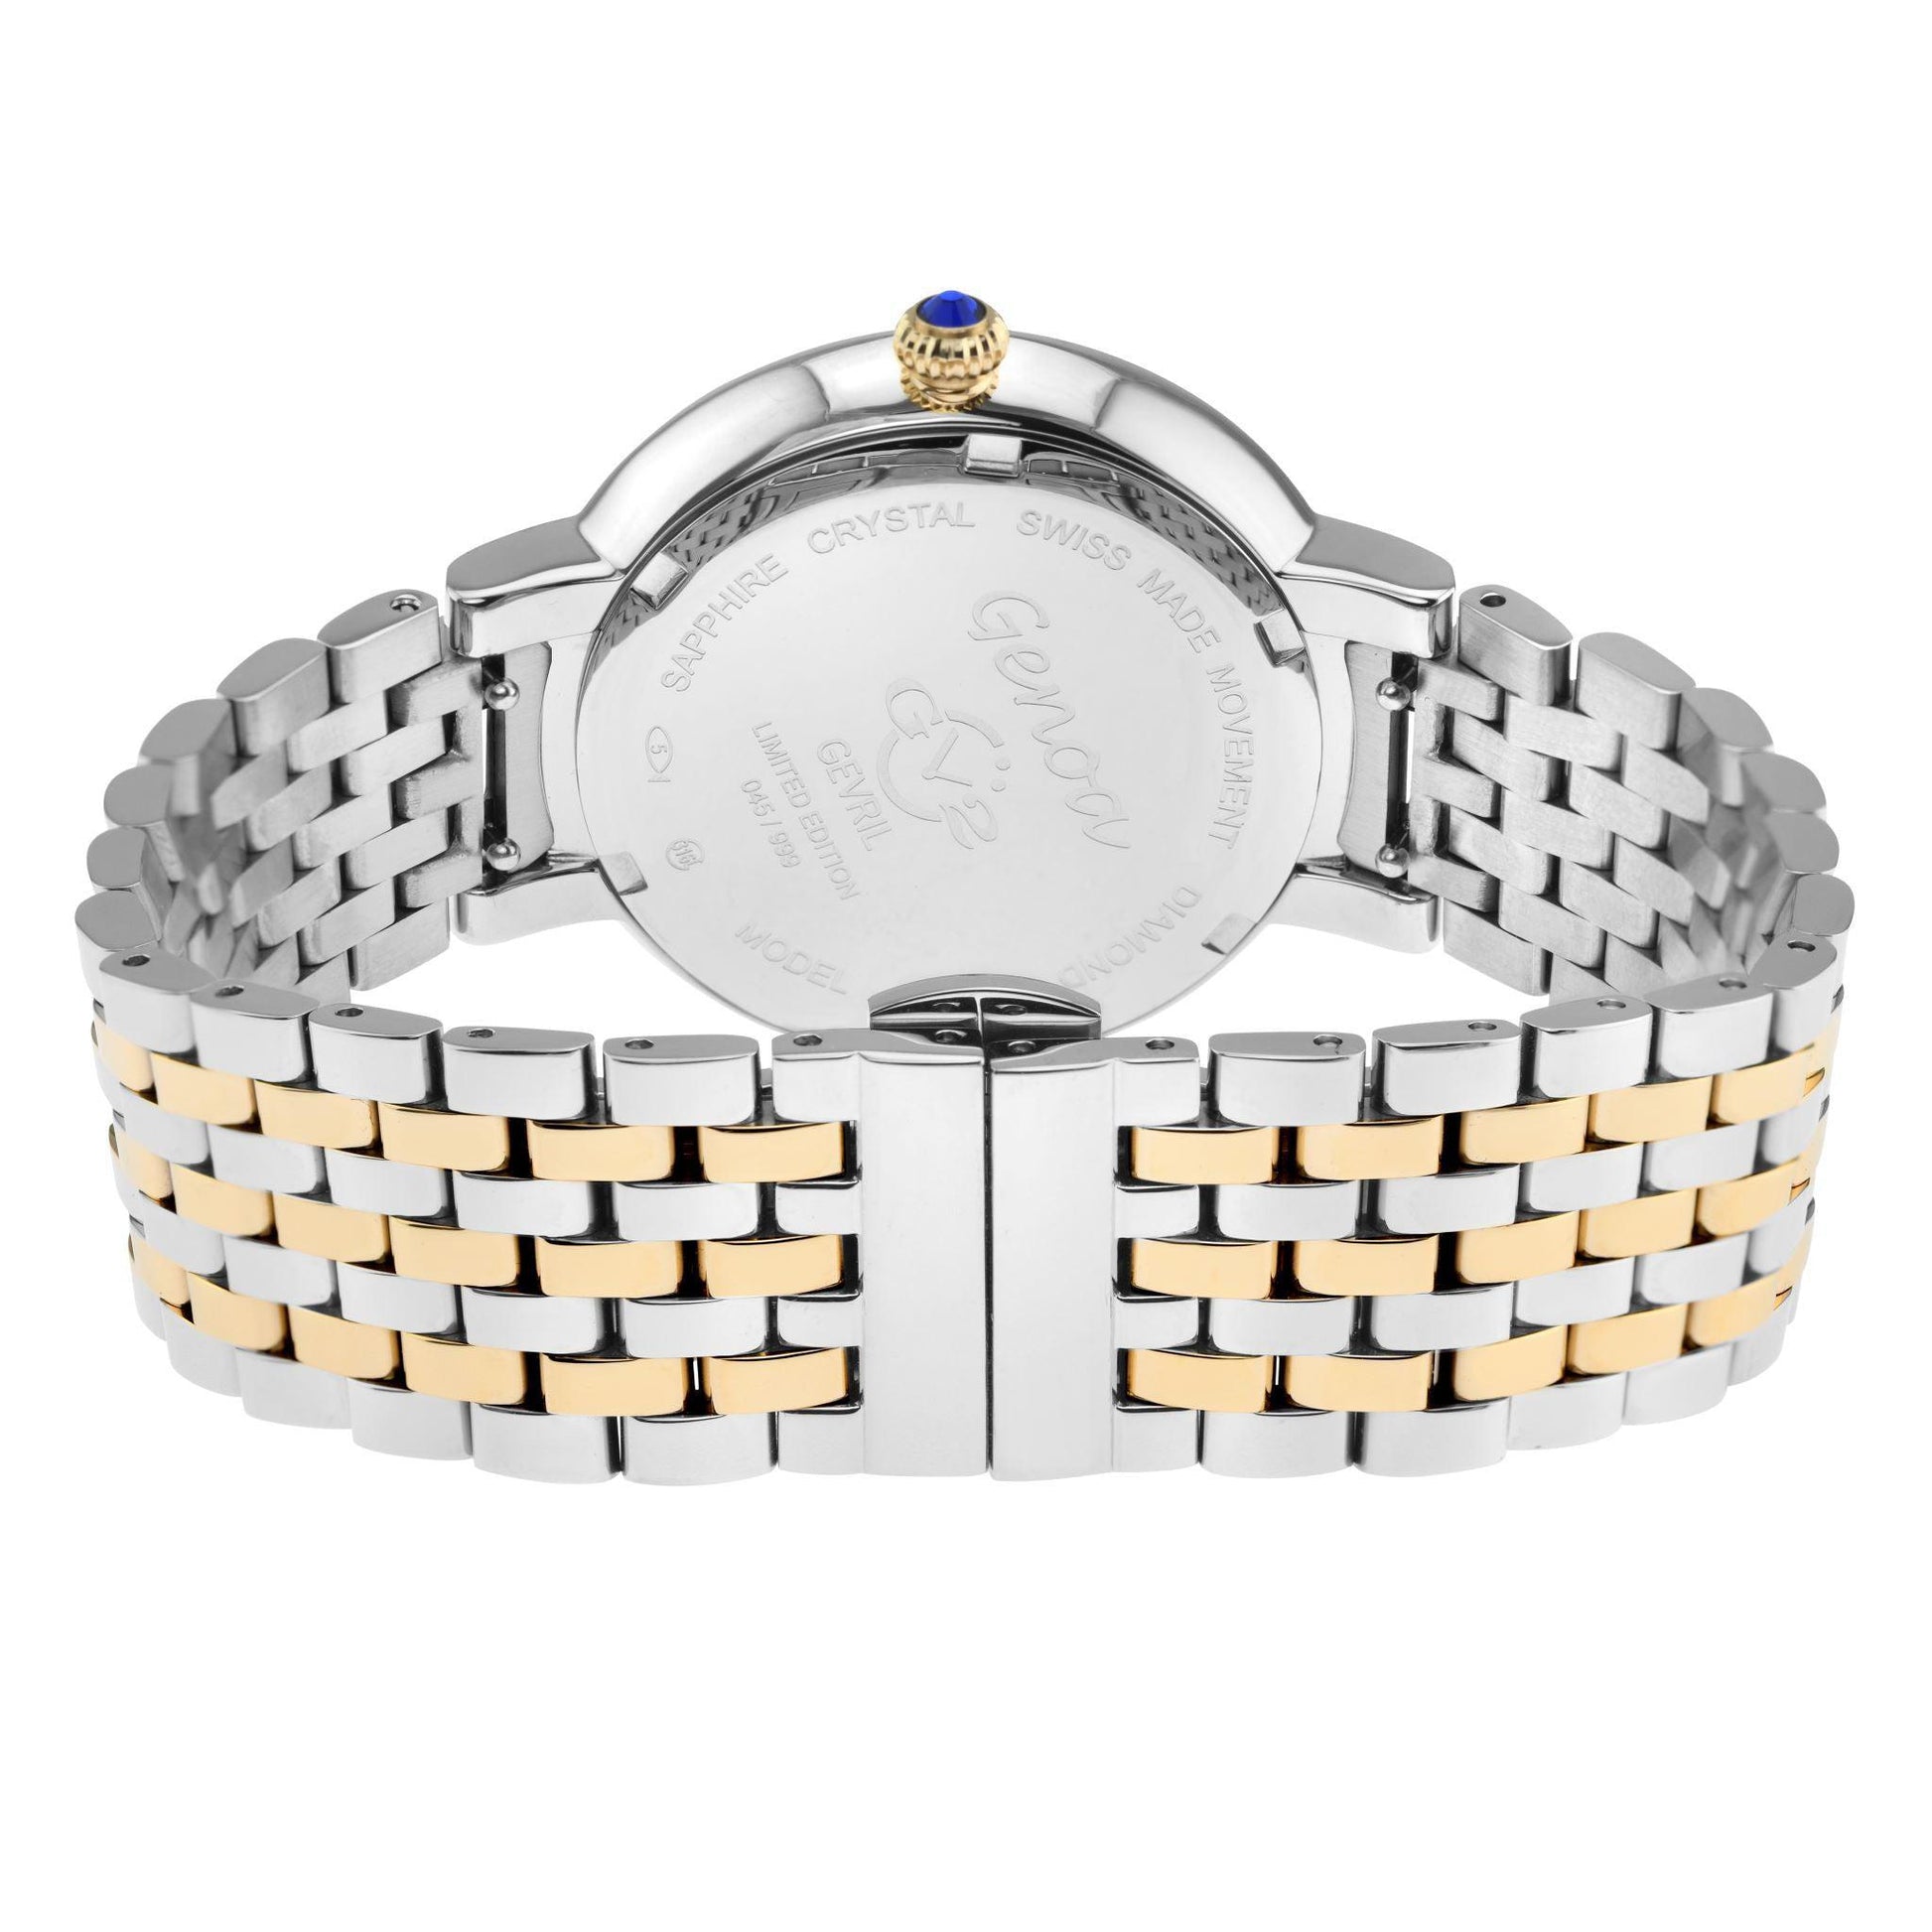 Gevril-Luxury-Swiss-Watches-GV2 Genoa Diamond-12534